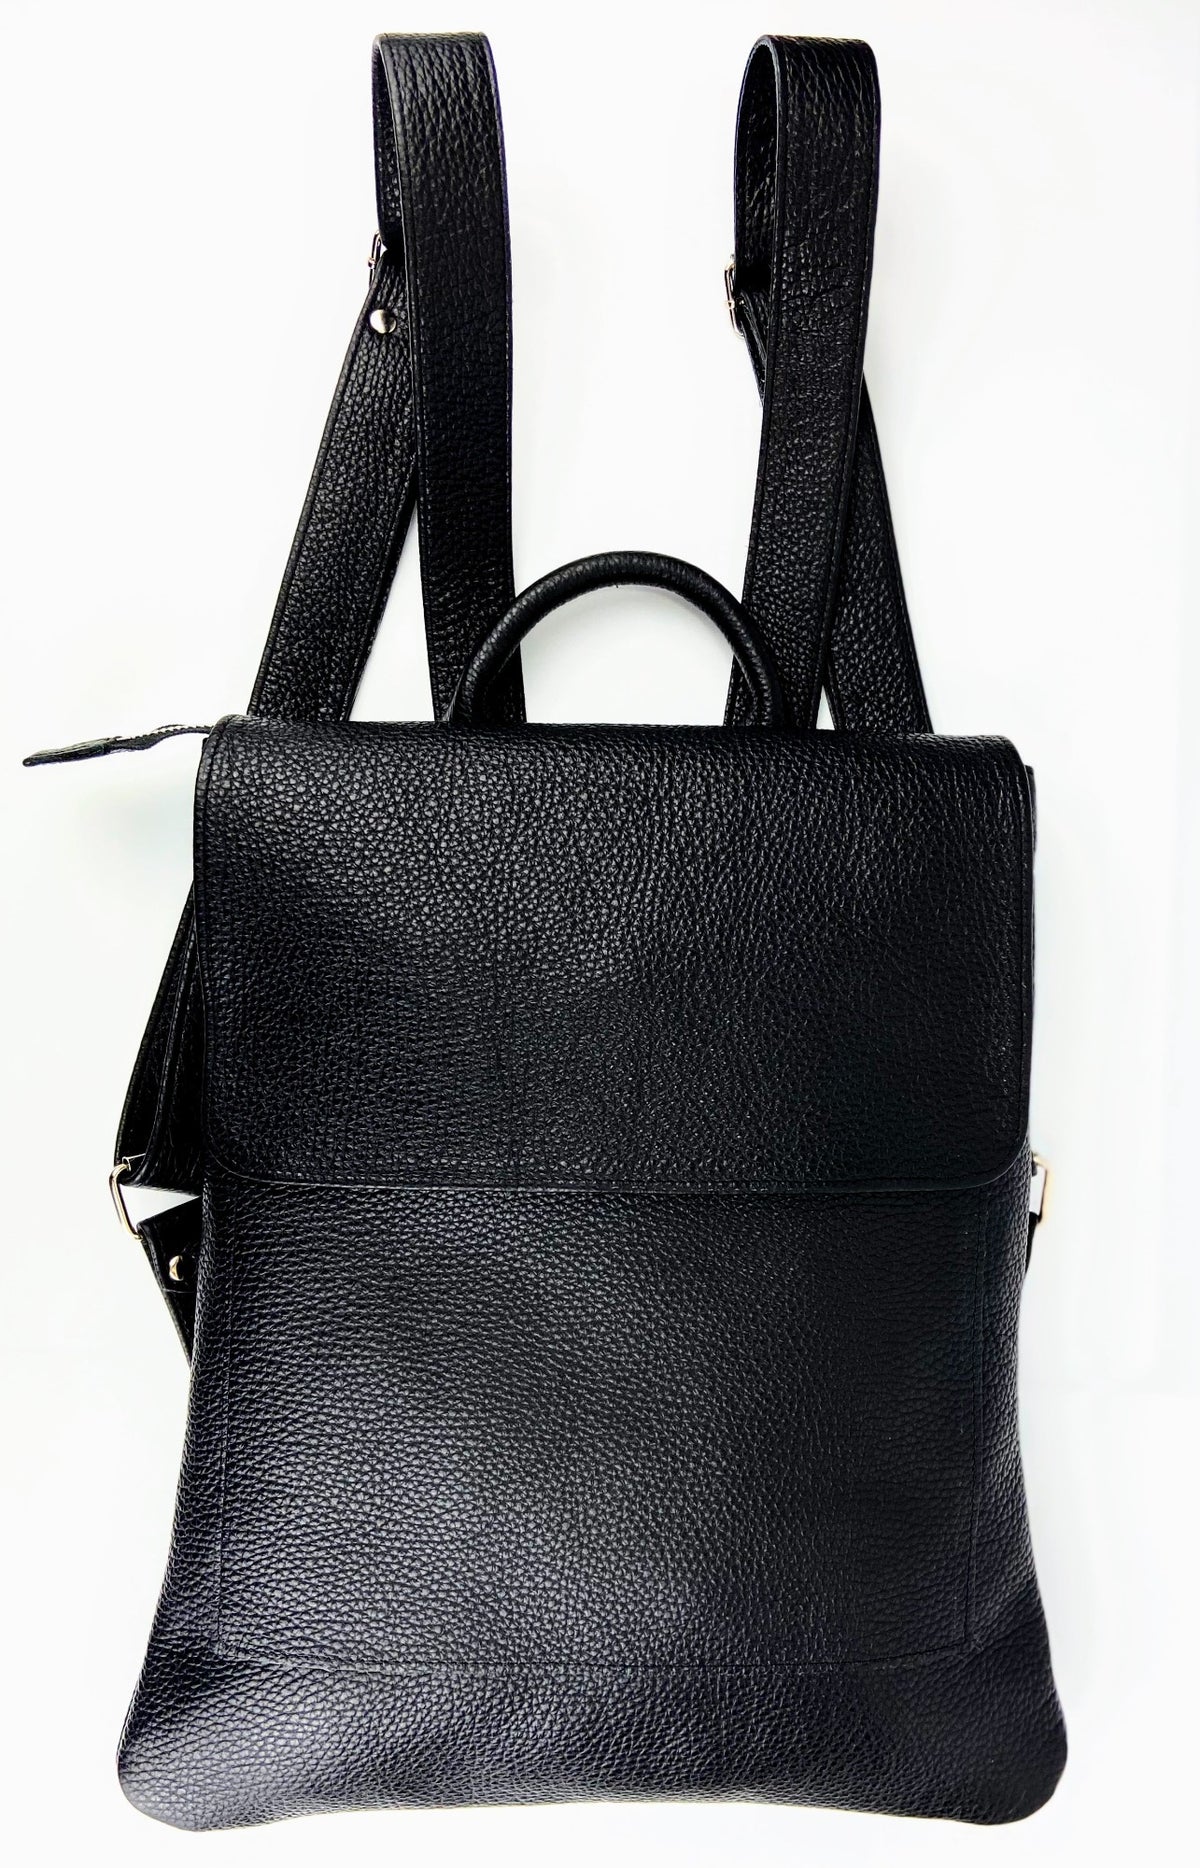 Leslie Dinky Pal rucksack in black pebbled leather